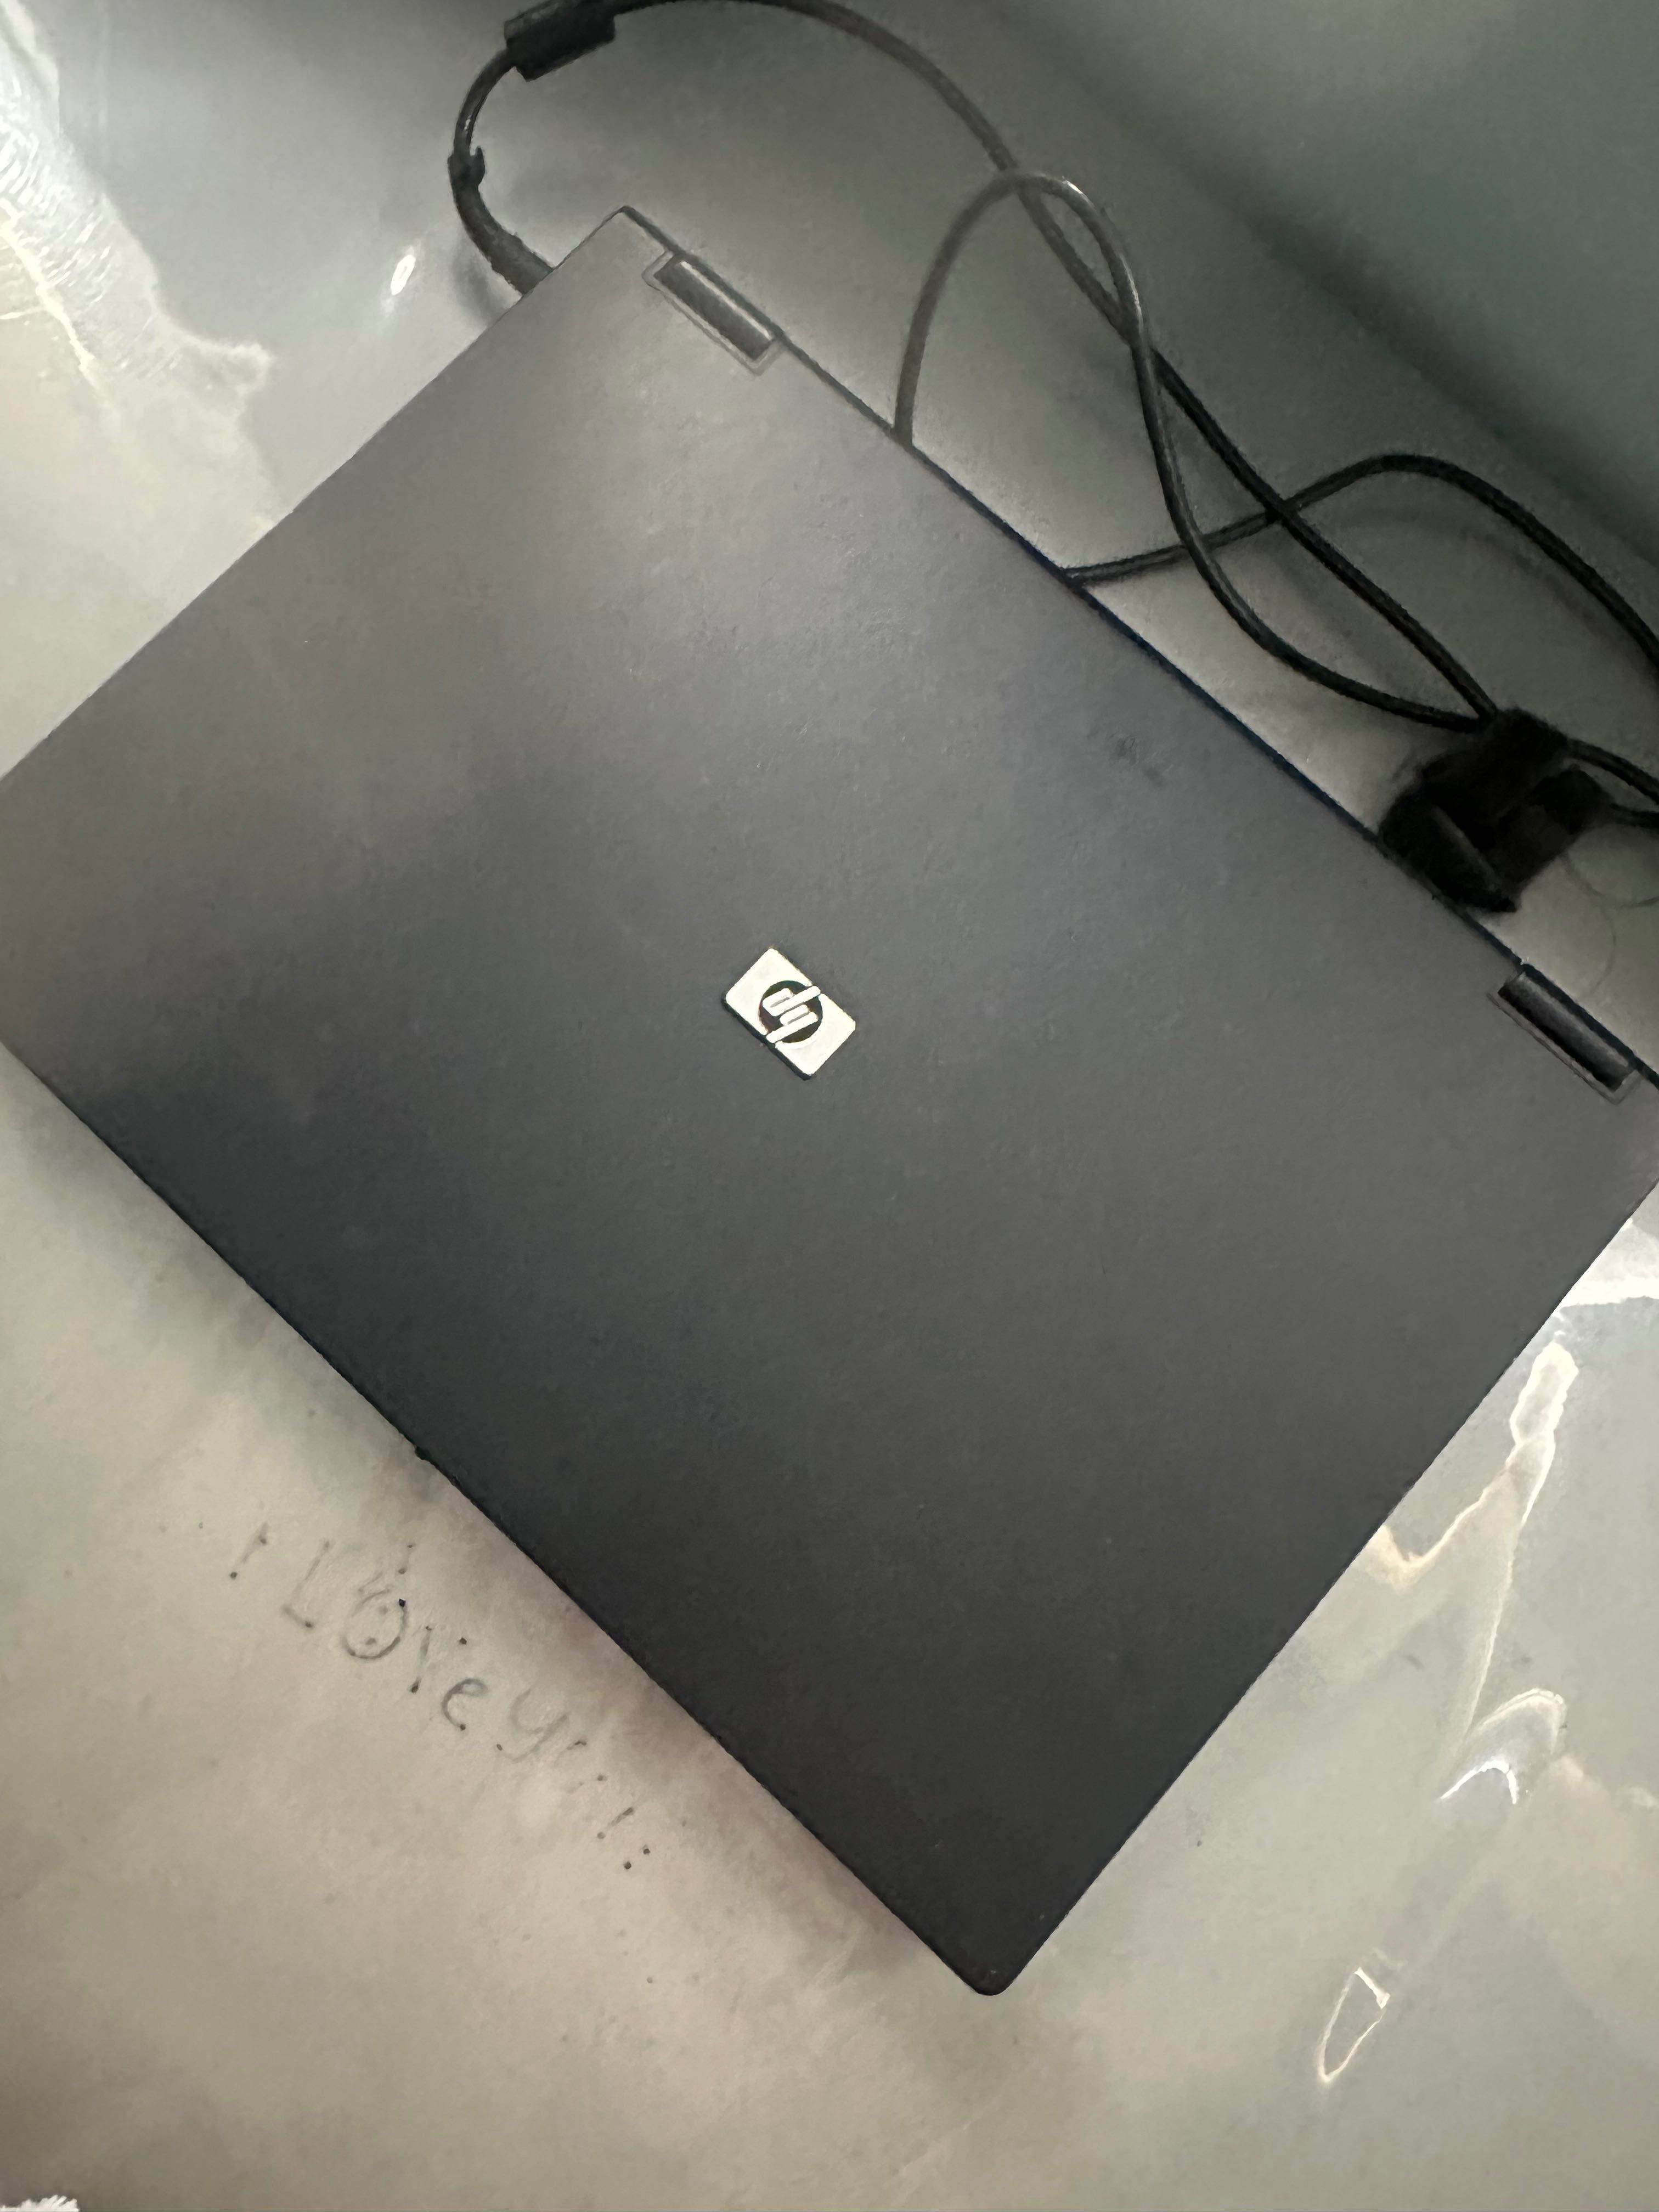 Ноутбук HP 6710s